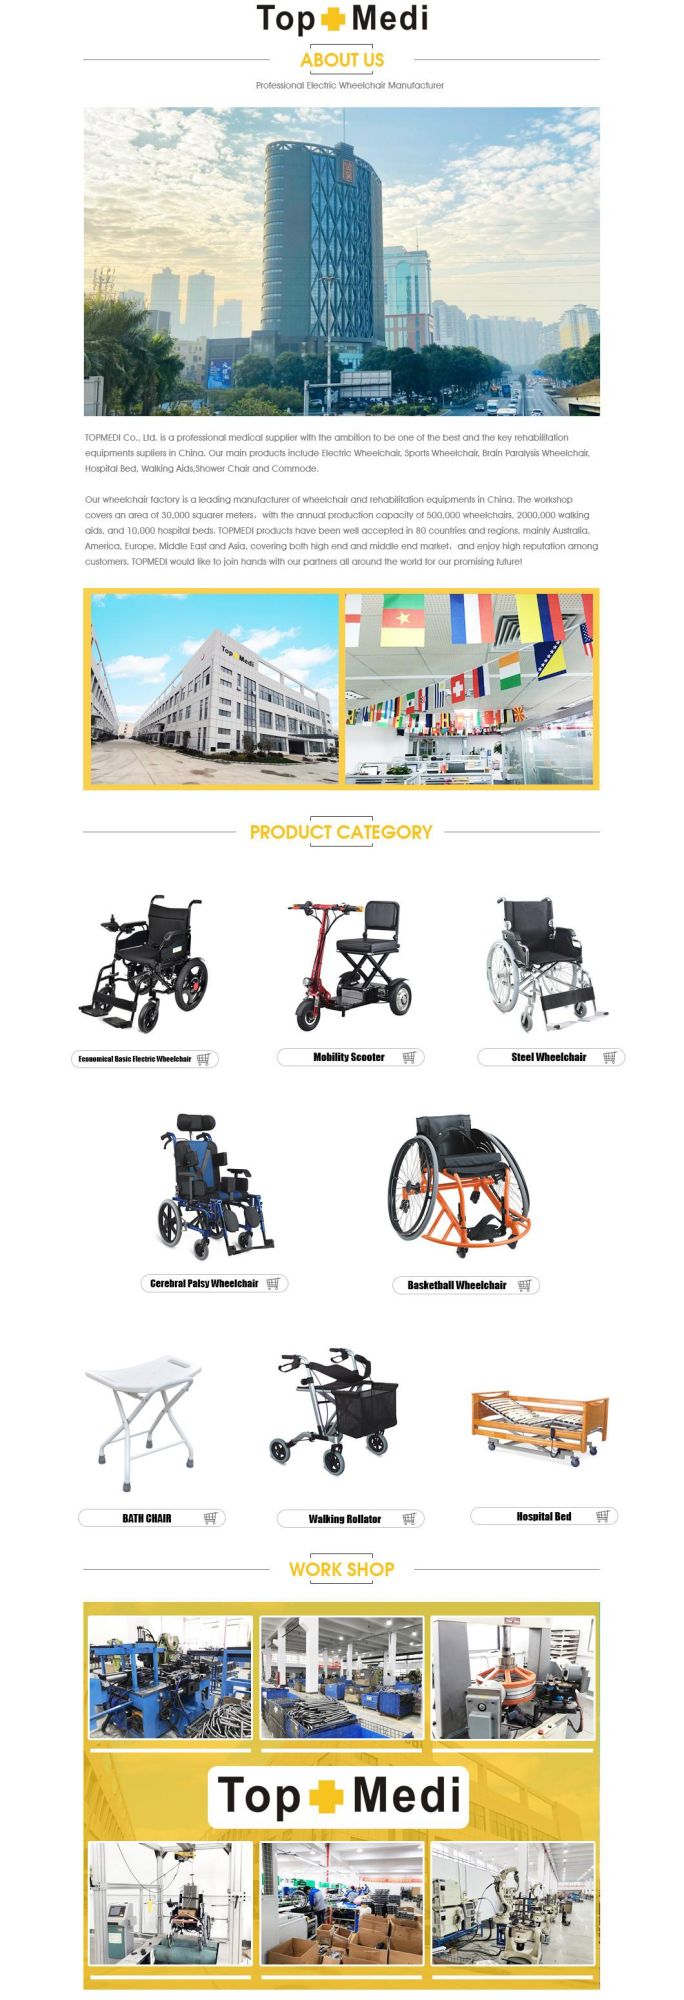 New Aluminium Alloy China Wheelchair for Elderly People Wheel Chair